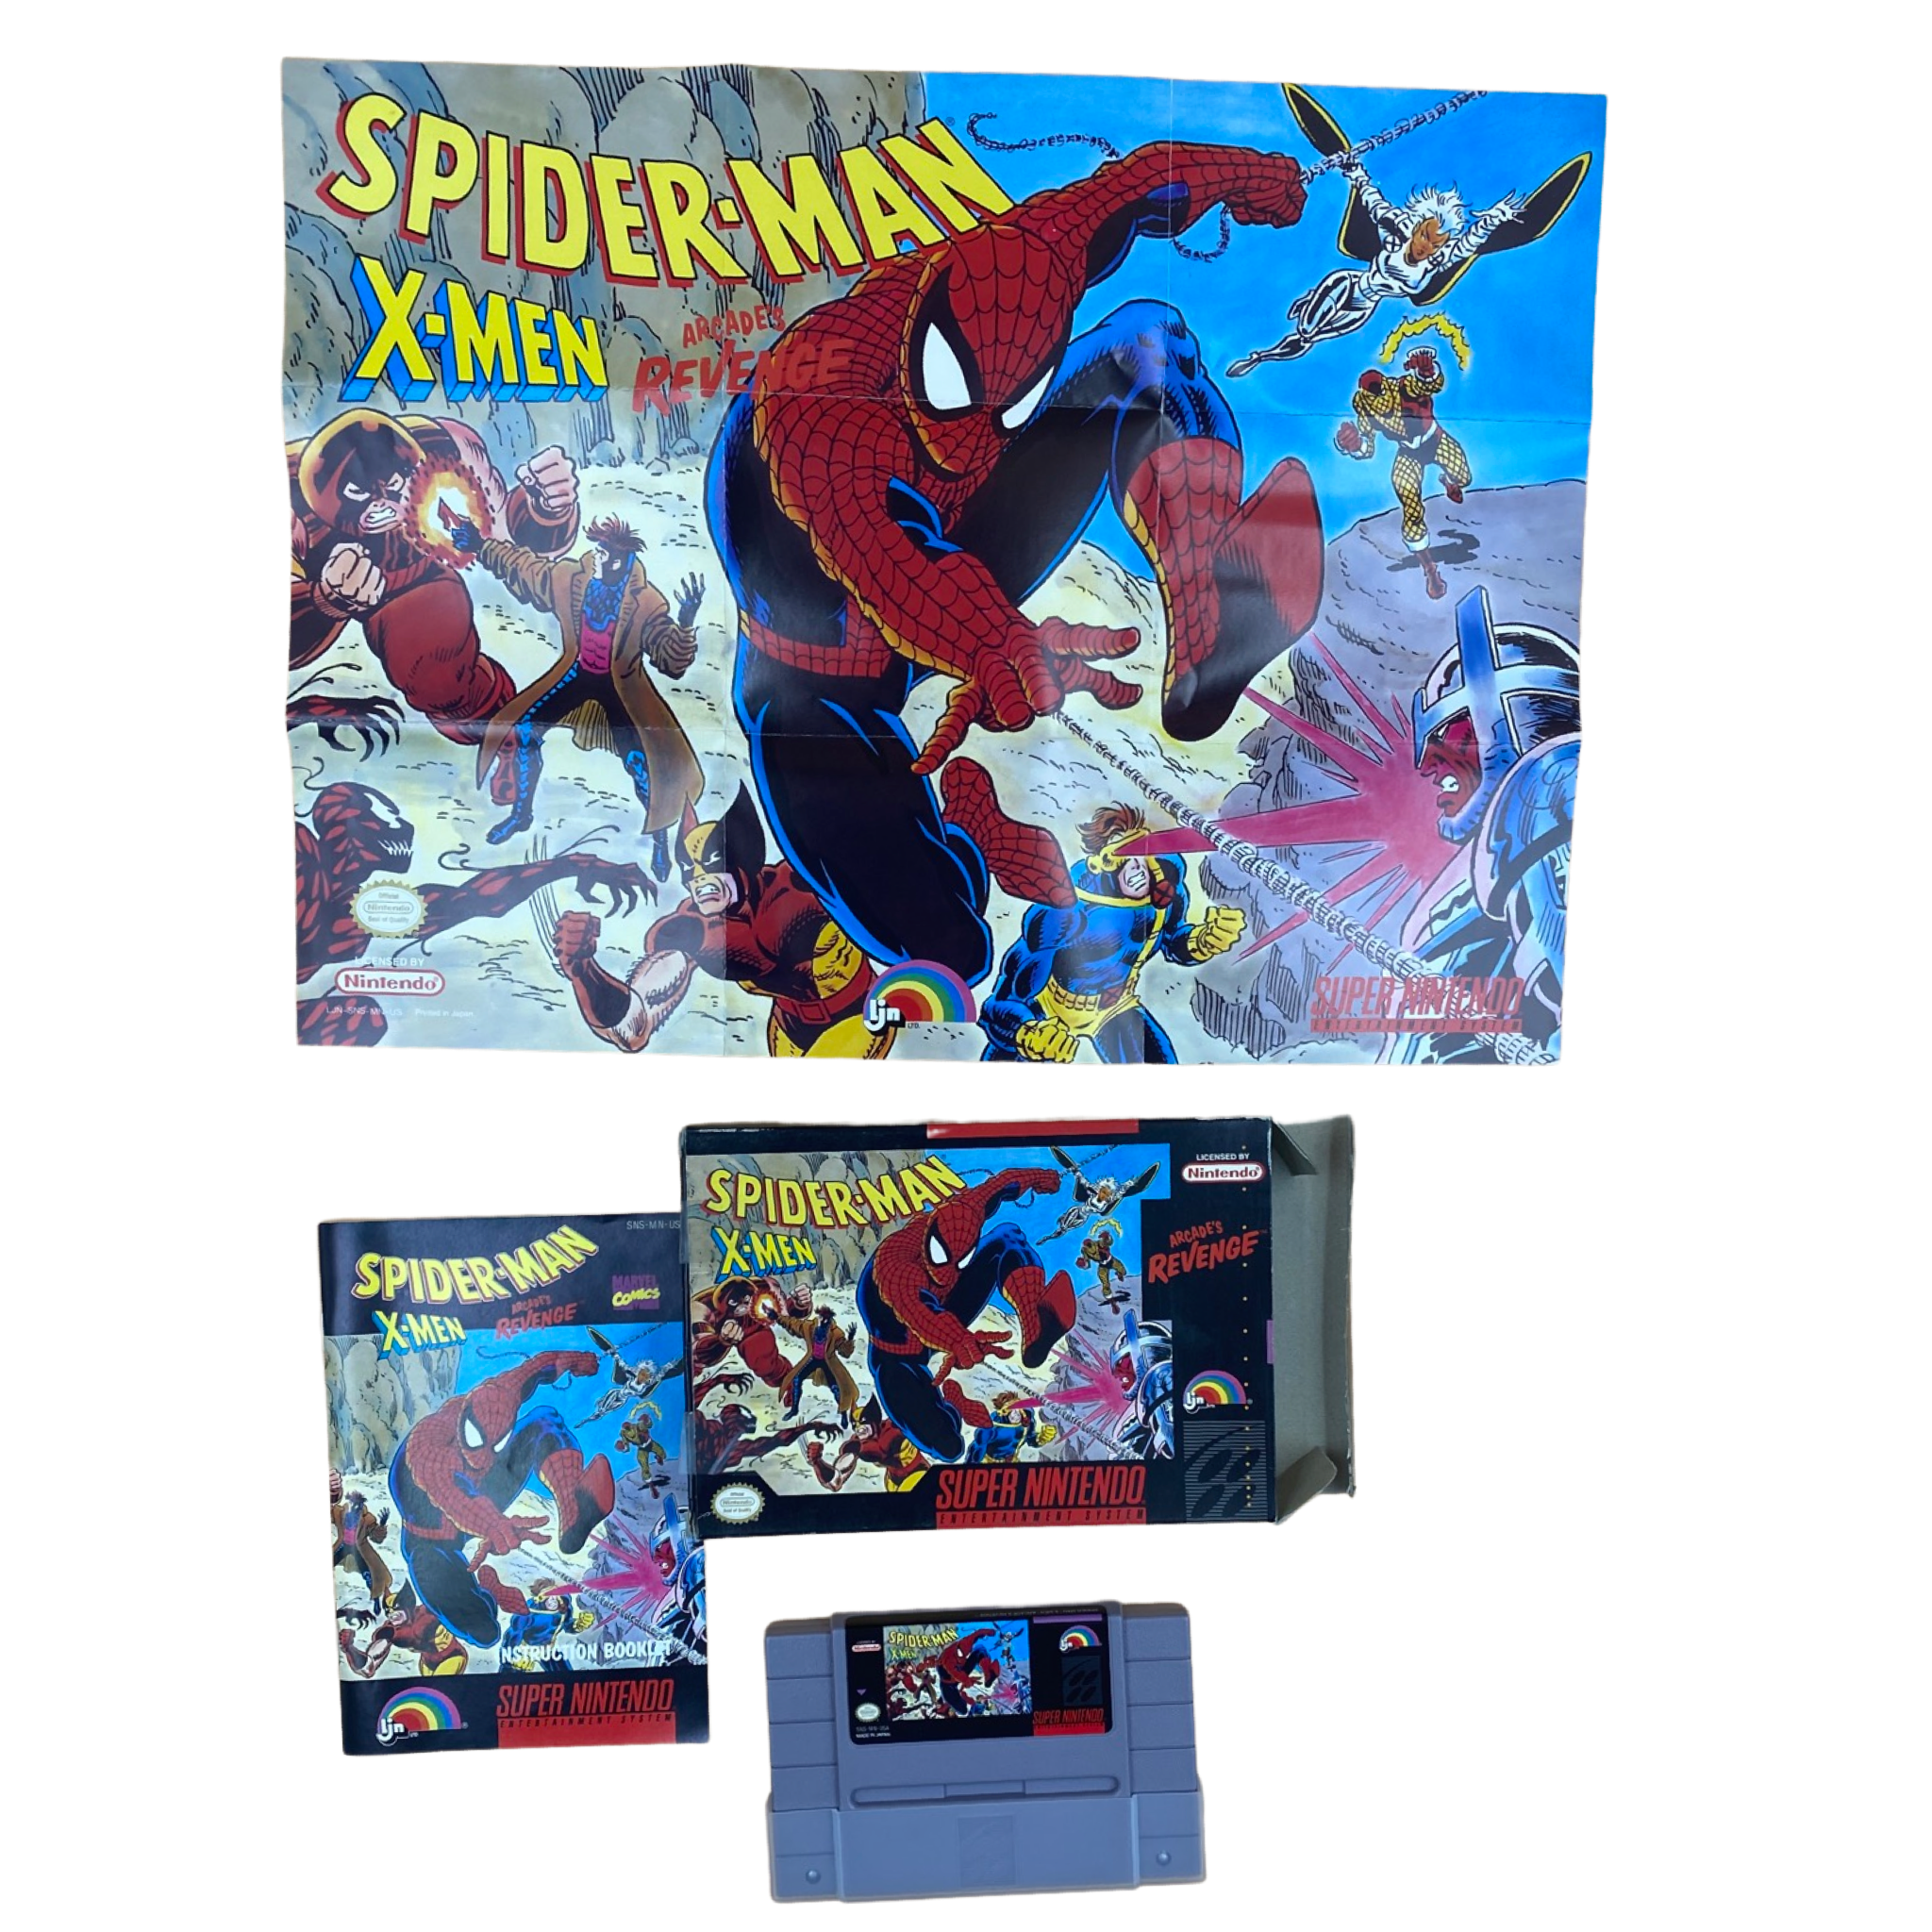 🕹️ Play Retro Games Online: The Amazing Spider-Man (32X)